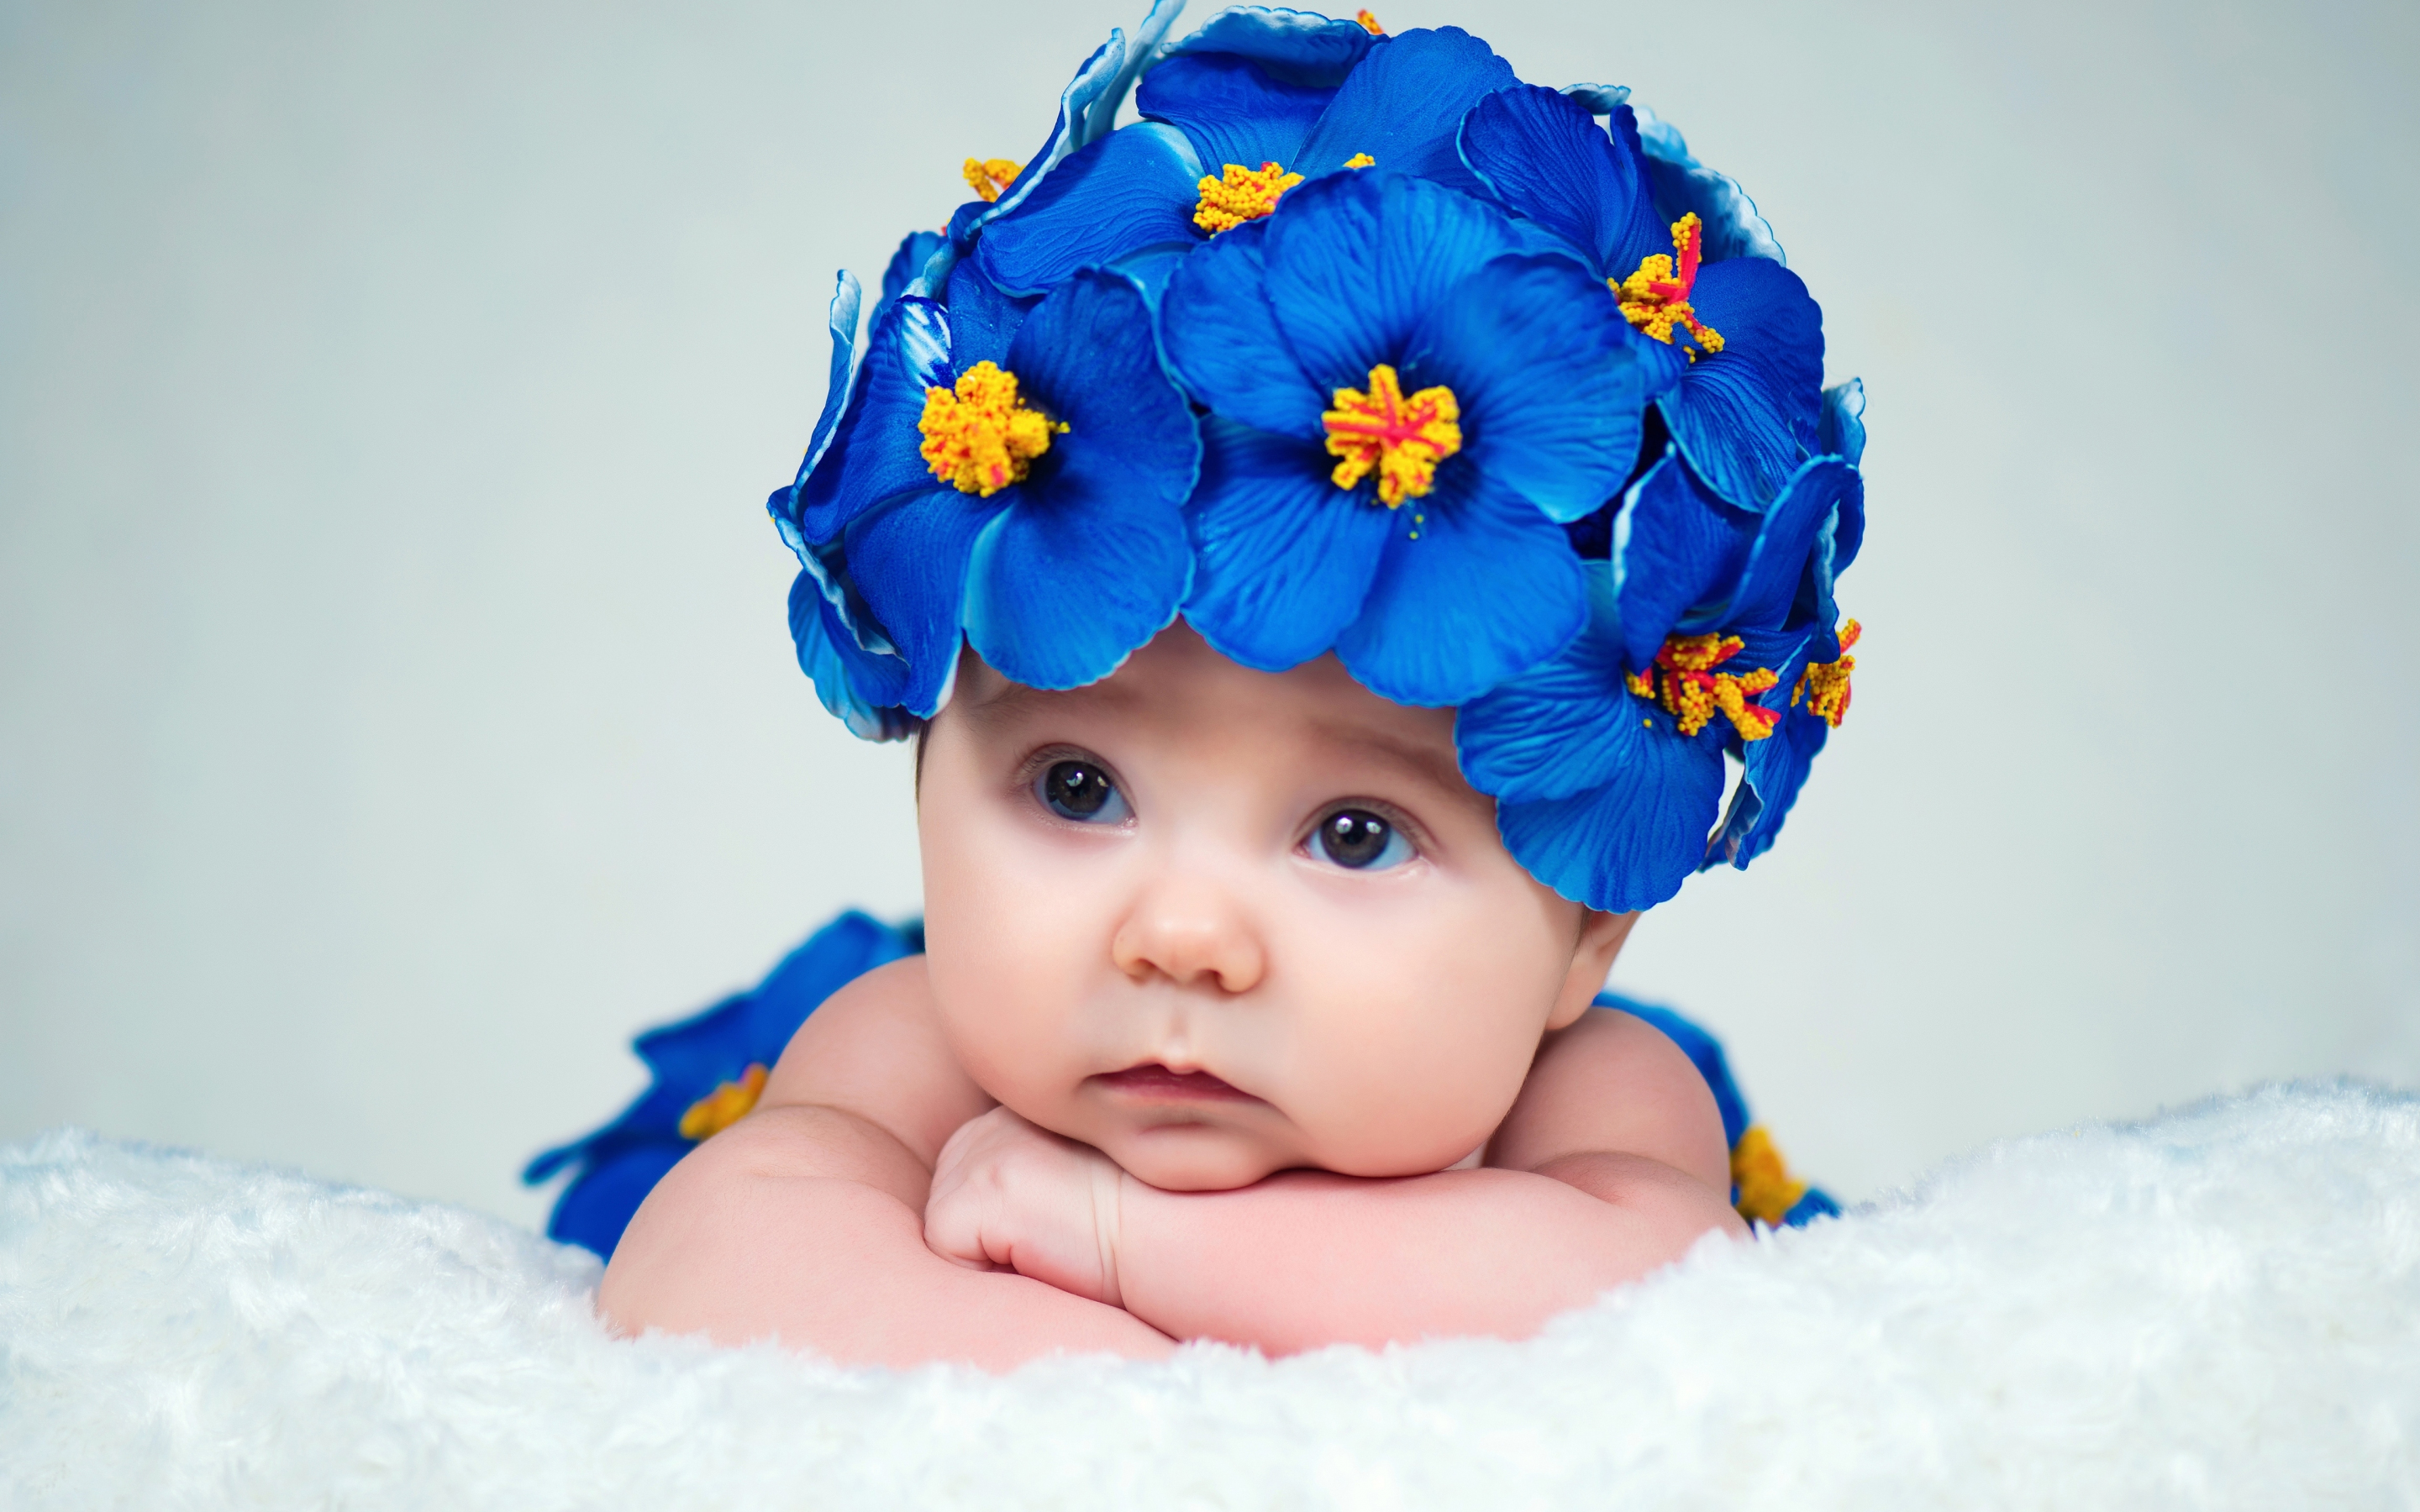 Cute baby, calm, flowers crown, 2880x1800 wallpaper